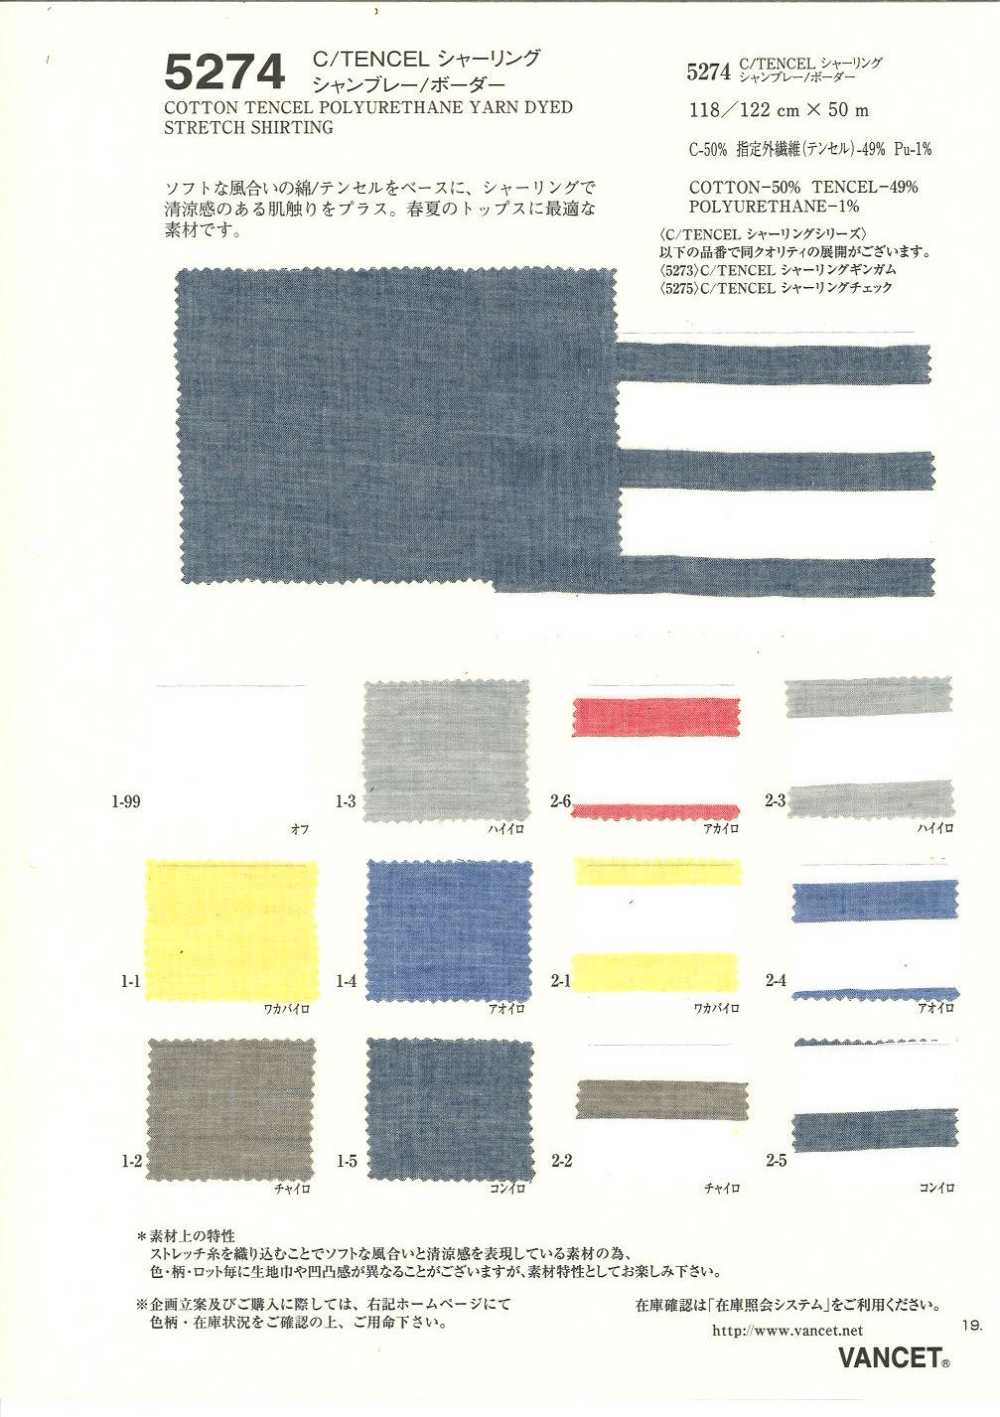 5274 C / TENCEL Cambray Fruncido / Rayas Horizontales[Fabrica Textil] VANCET